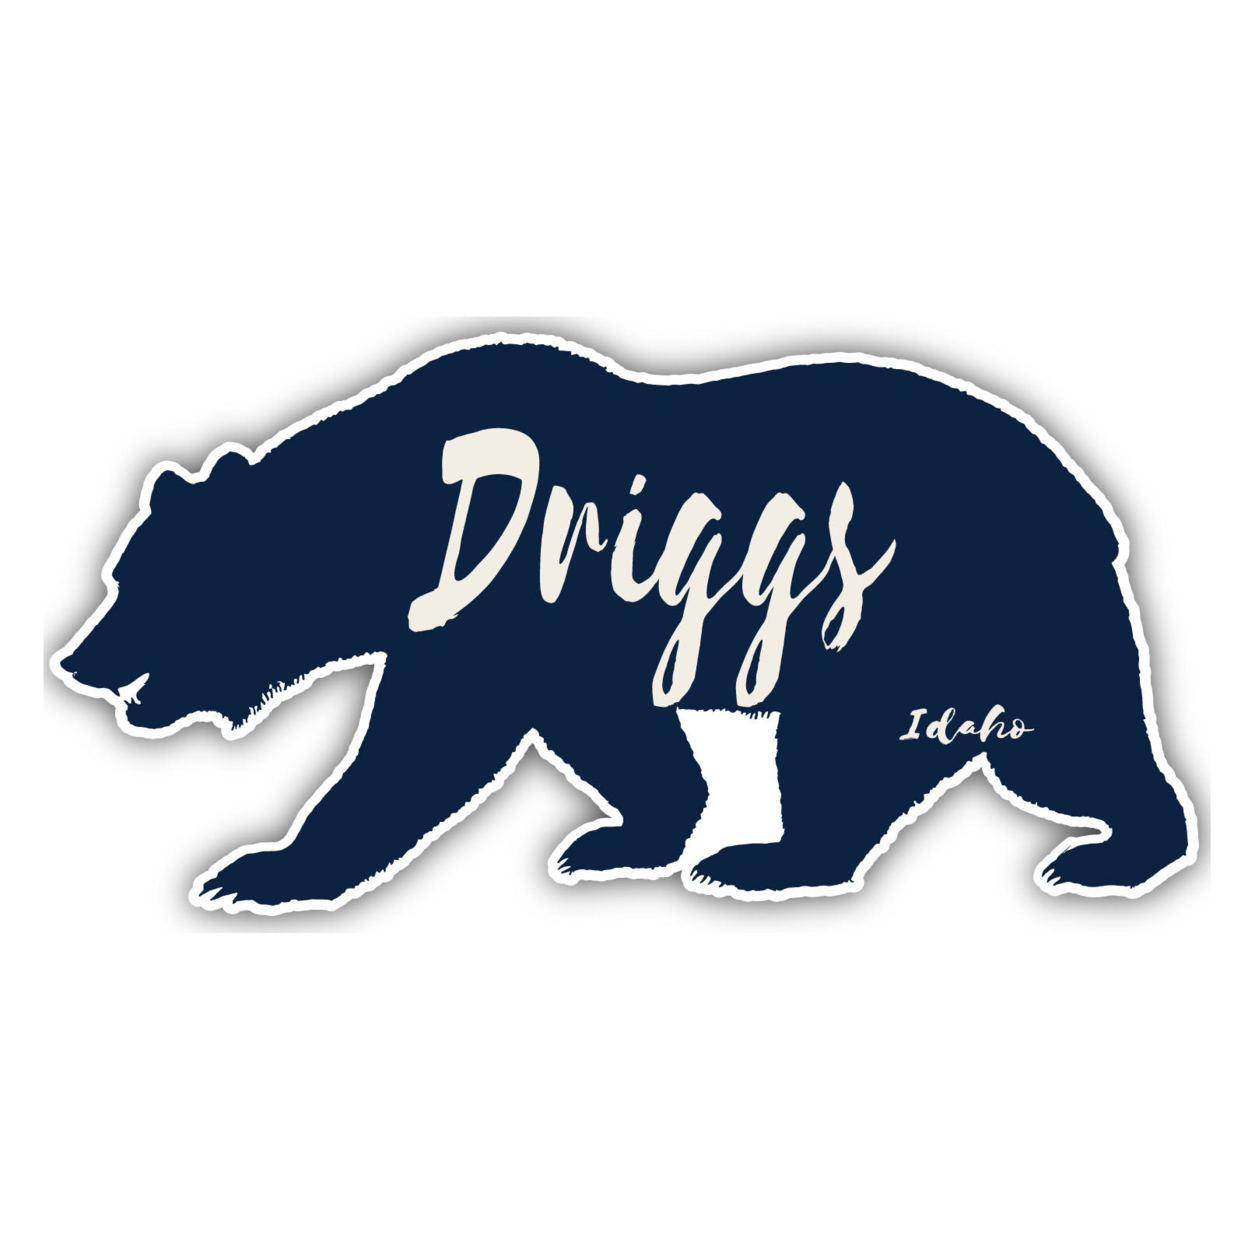 Driggs Idaho Souvenir Decorative Stickers (Choose Theme And Size) - Single Unit, 8-Inch, Adventures Awaits